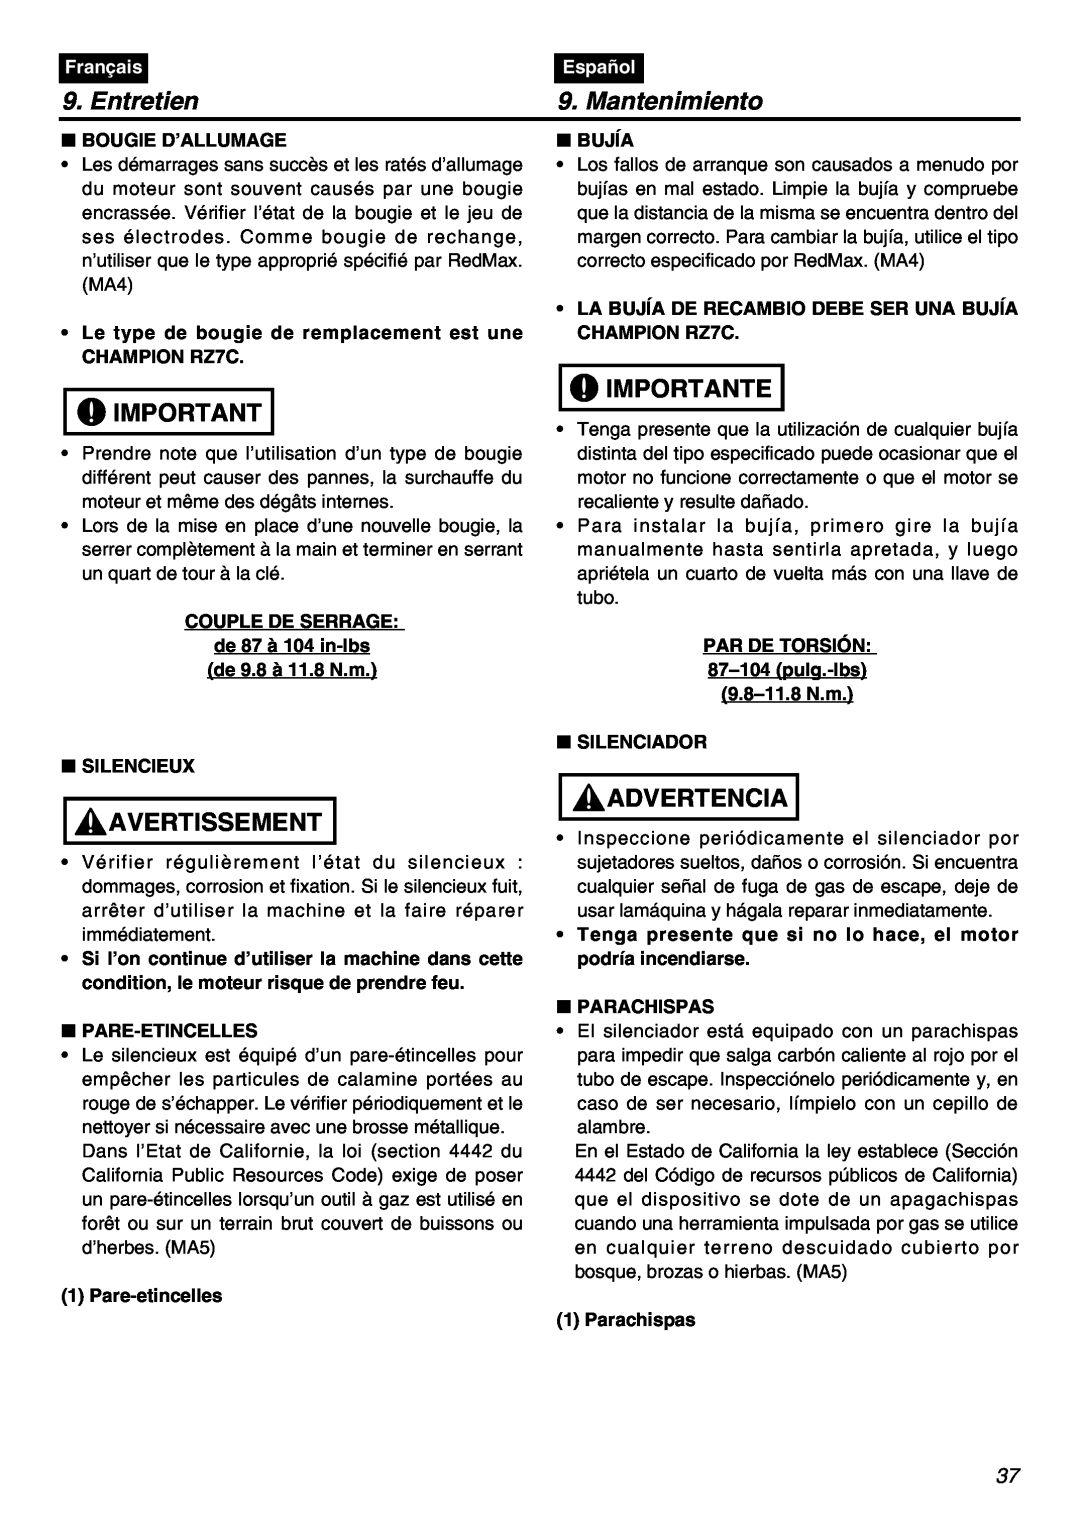 RedMax BCZ2401S-CA Bougie D’Allumage, Bujía, Entretien, Mantenimiento, Avertissement, Importante, Advertencia, Français 